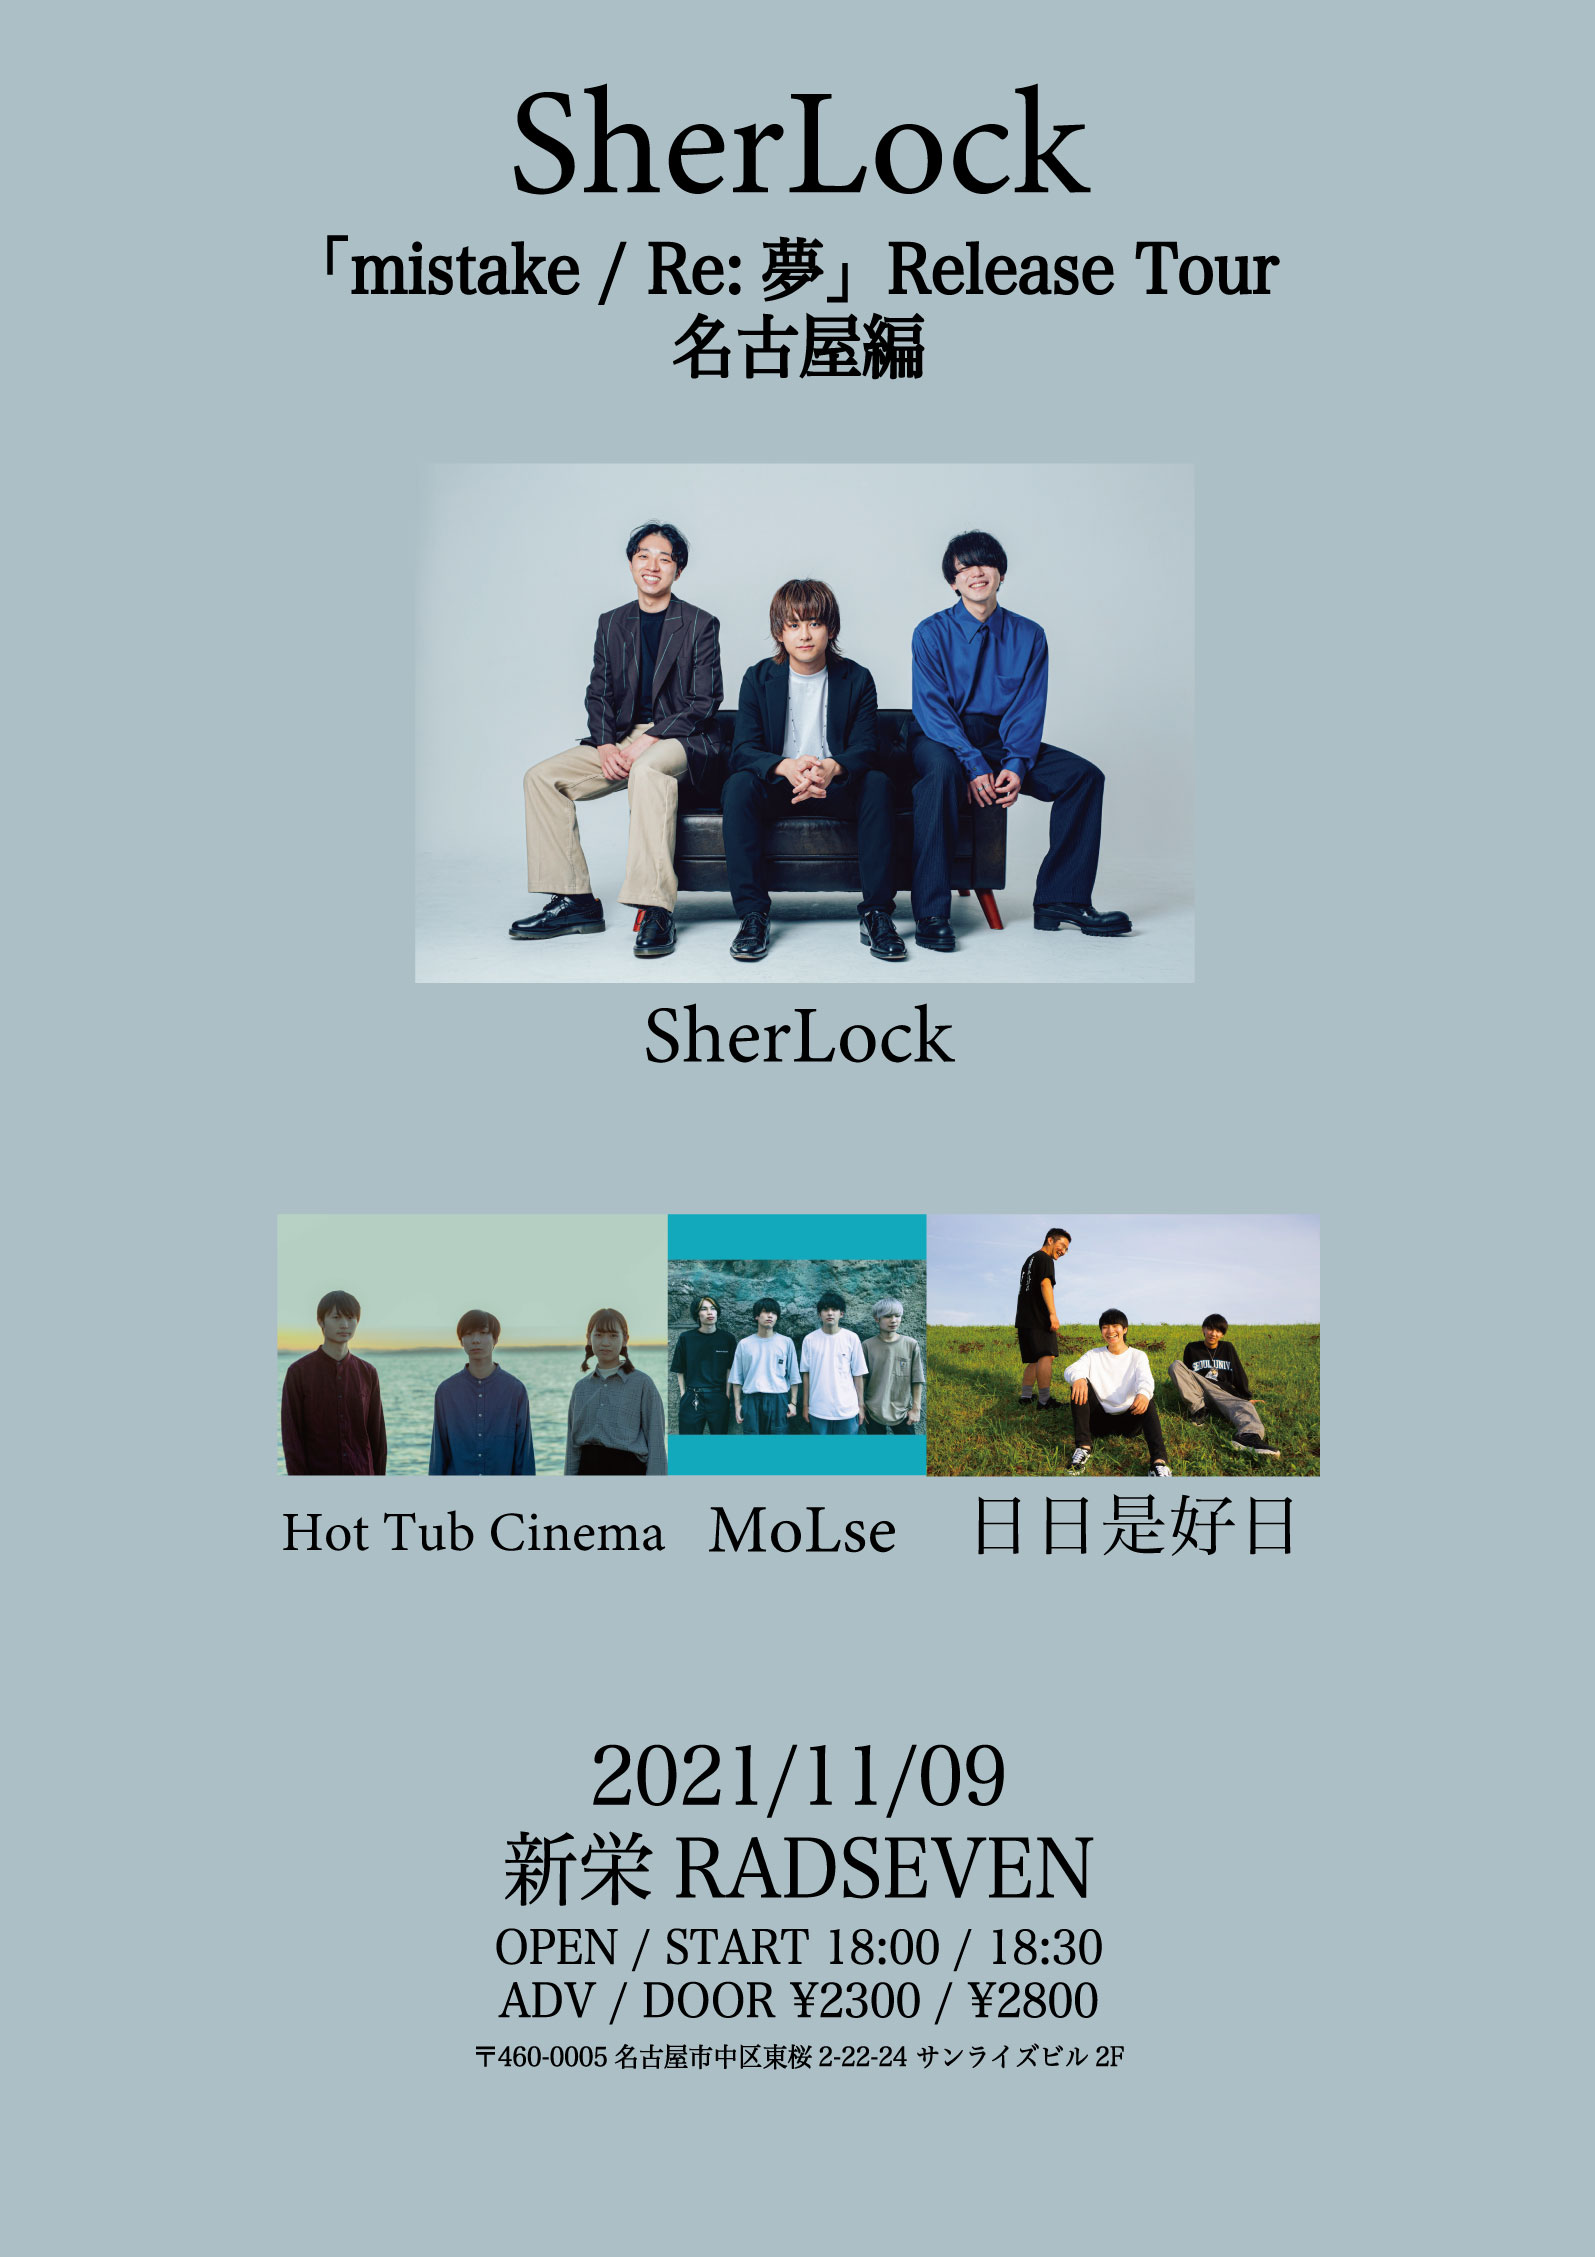 「SherLock「mistake / Re:夢」Release Tour」